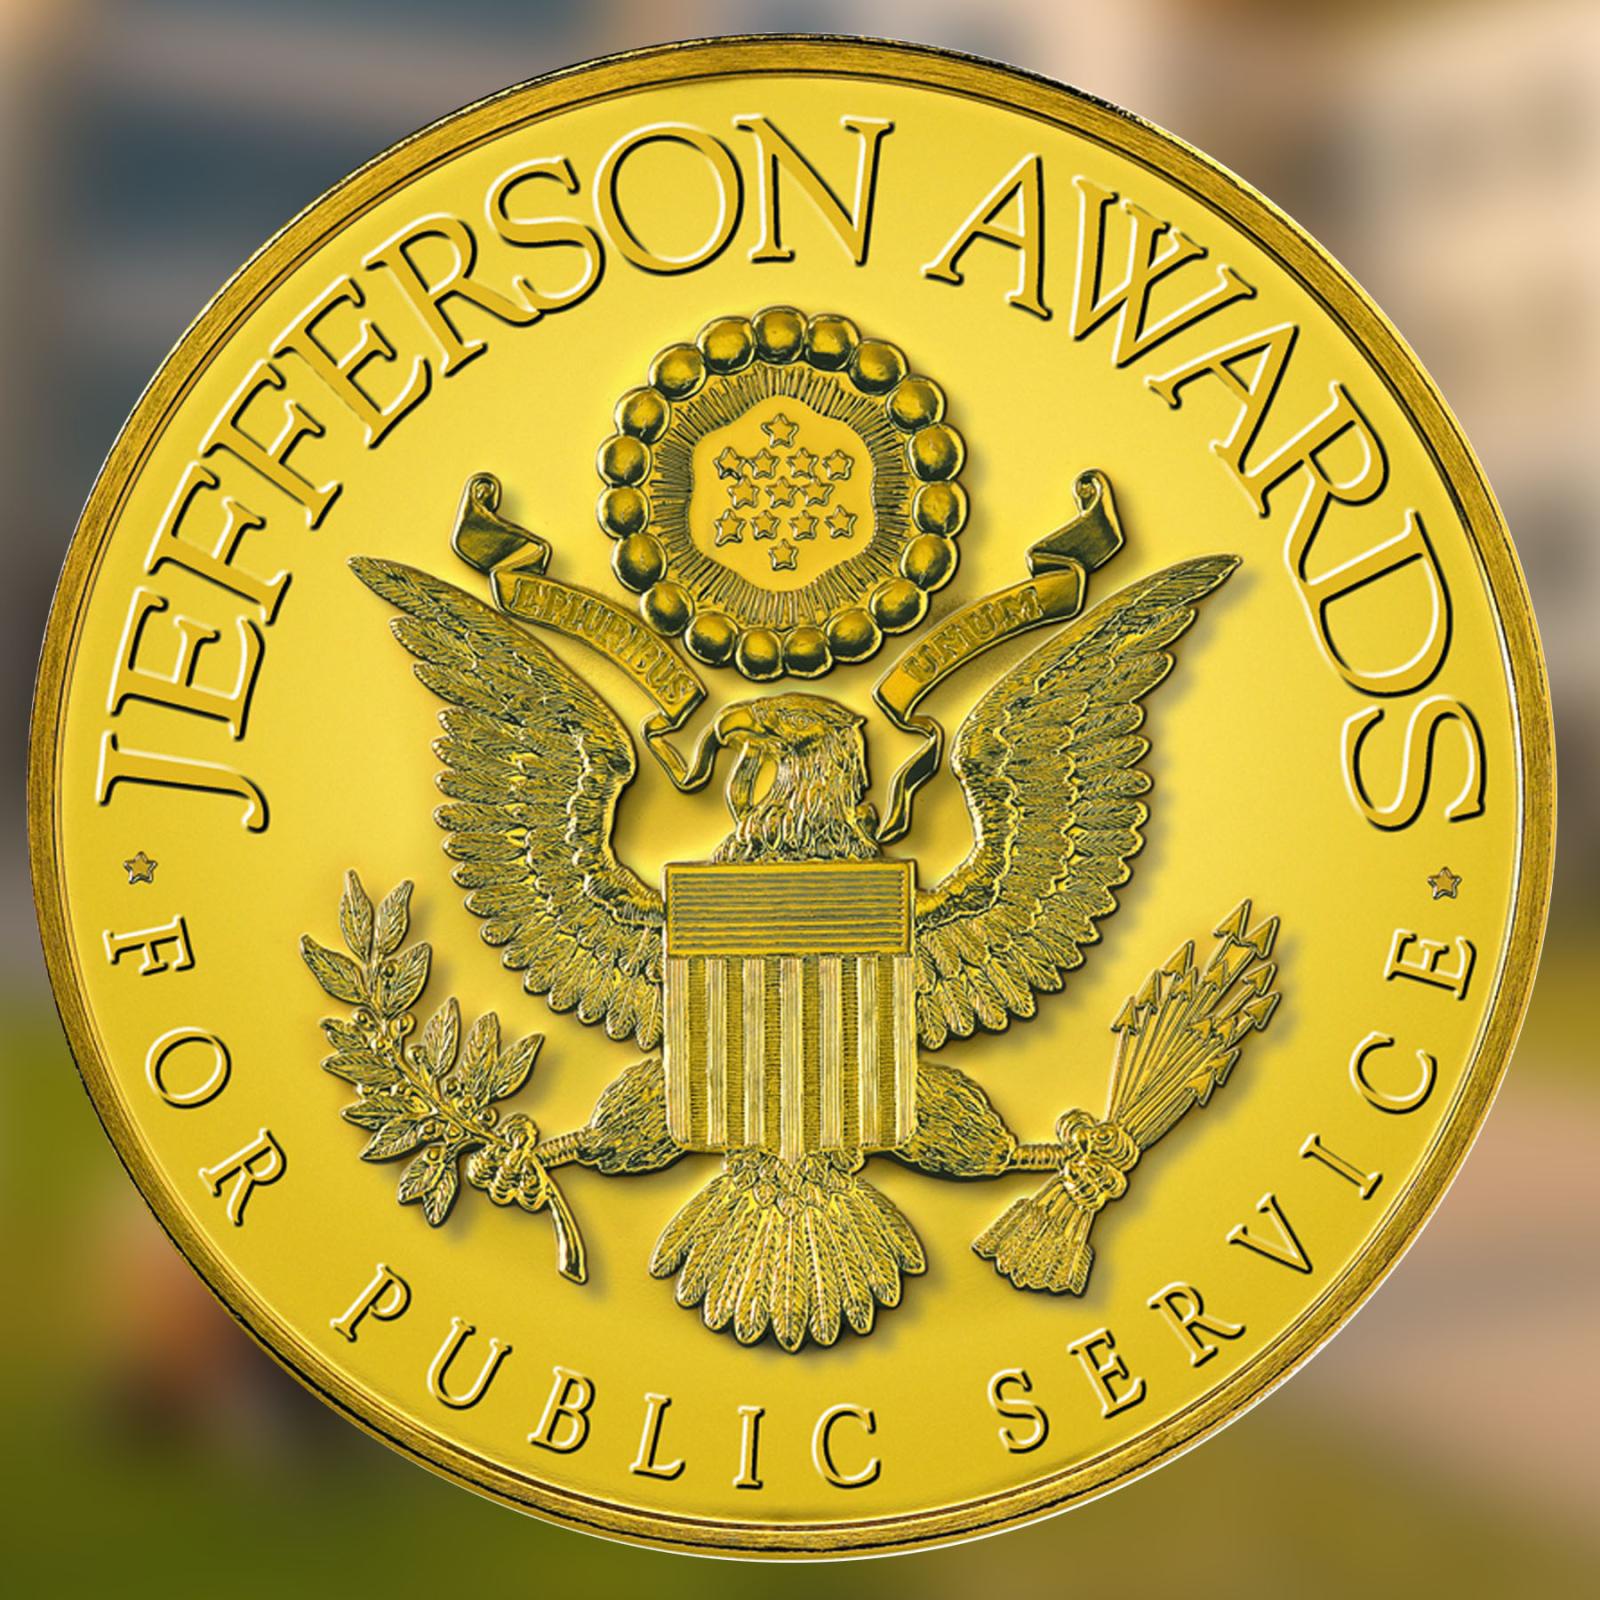 Jefferson award gold medal